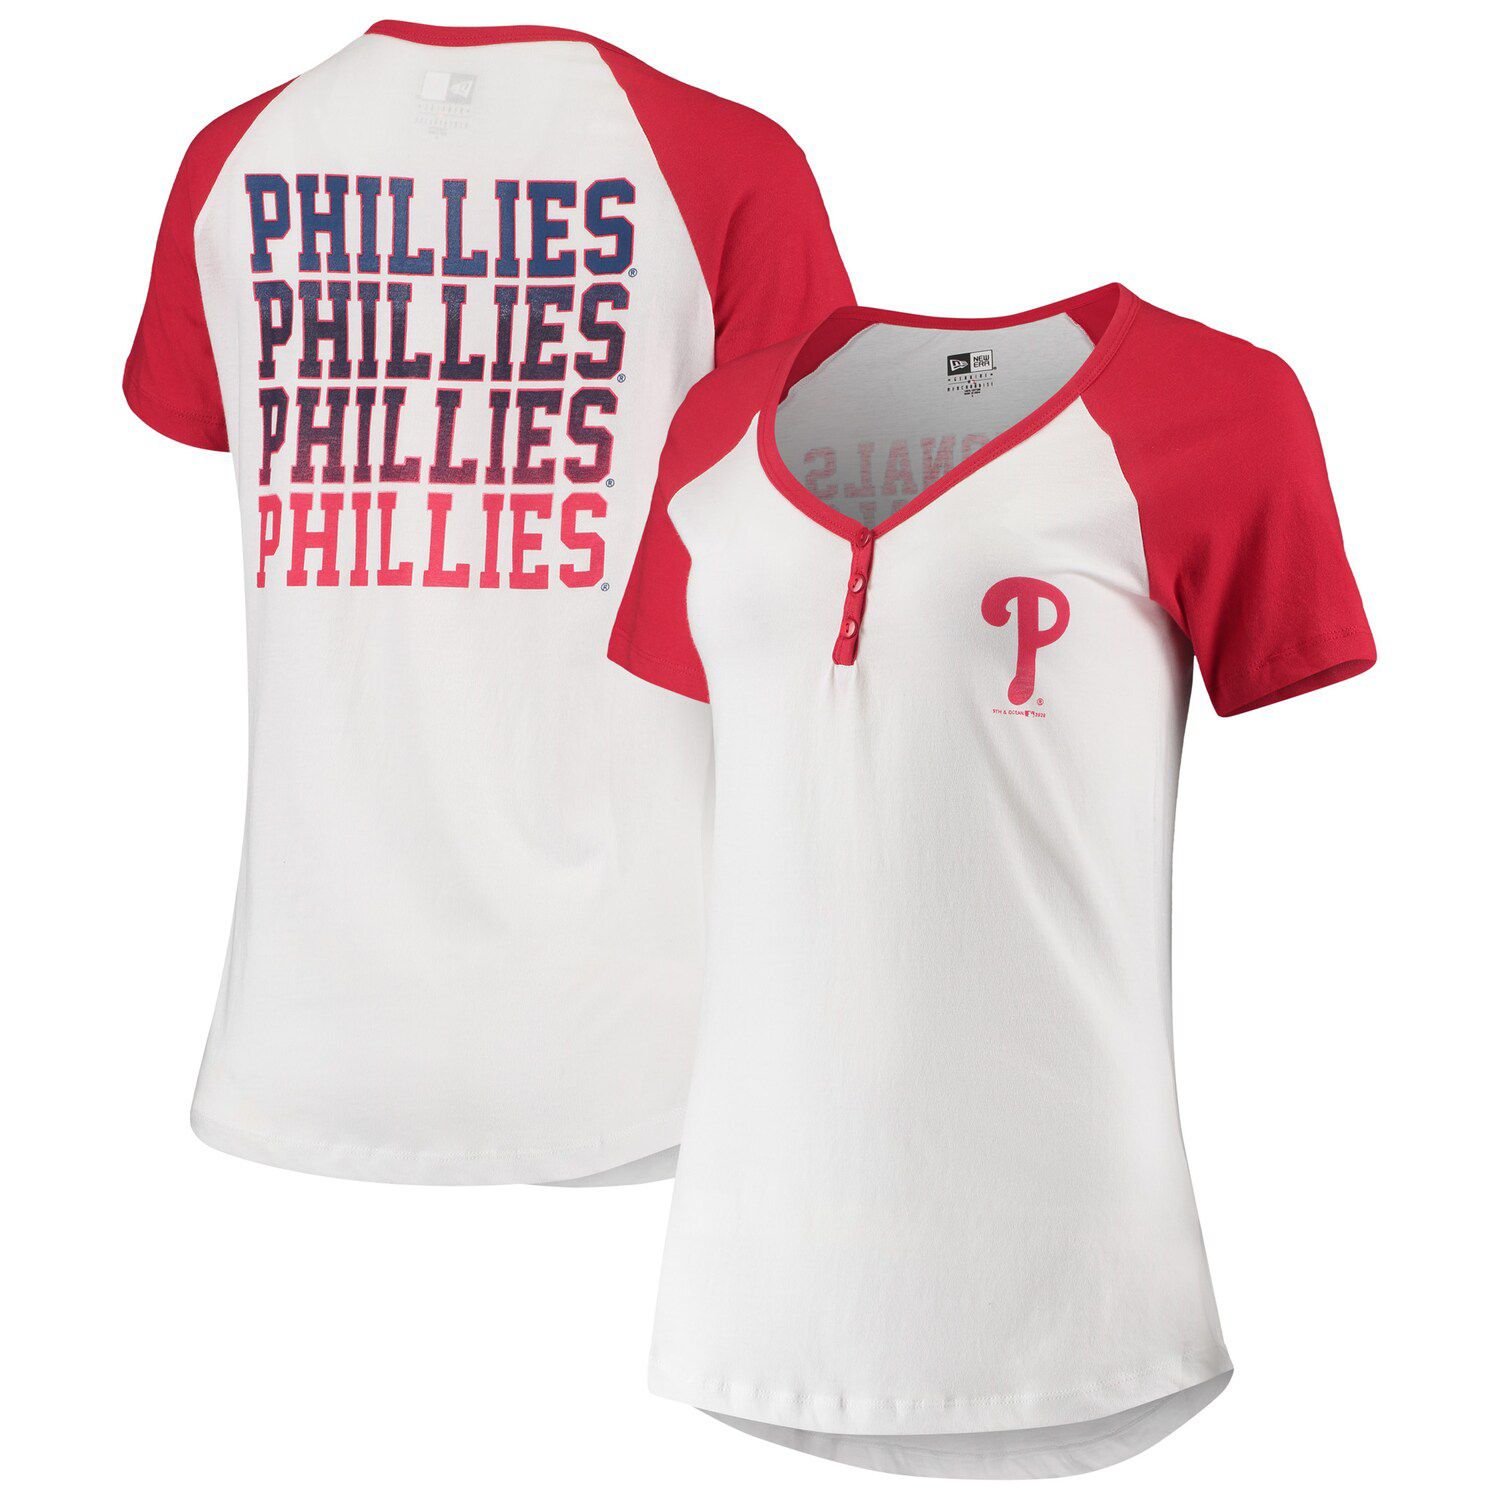 philadelphia phillies women's t shirts